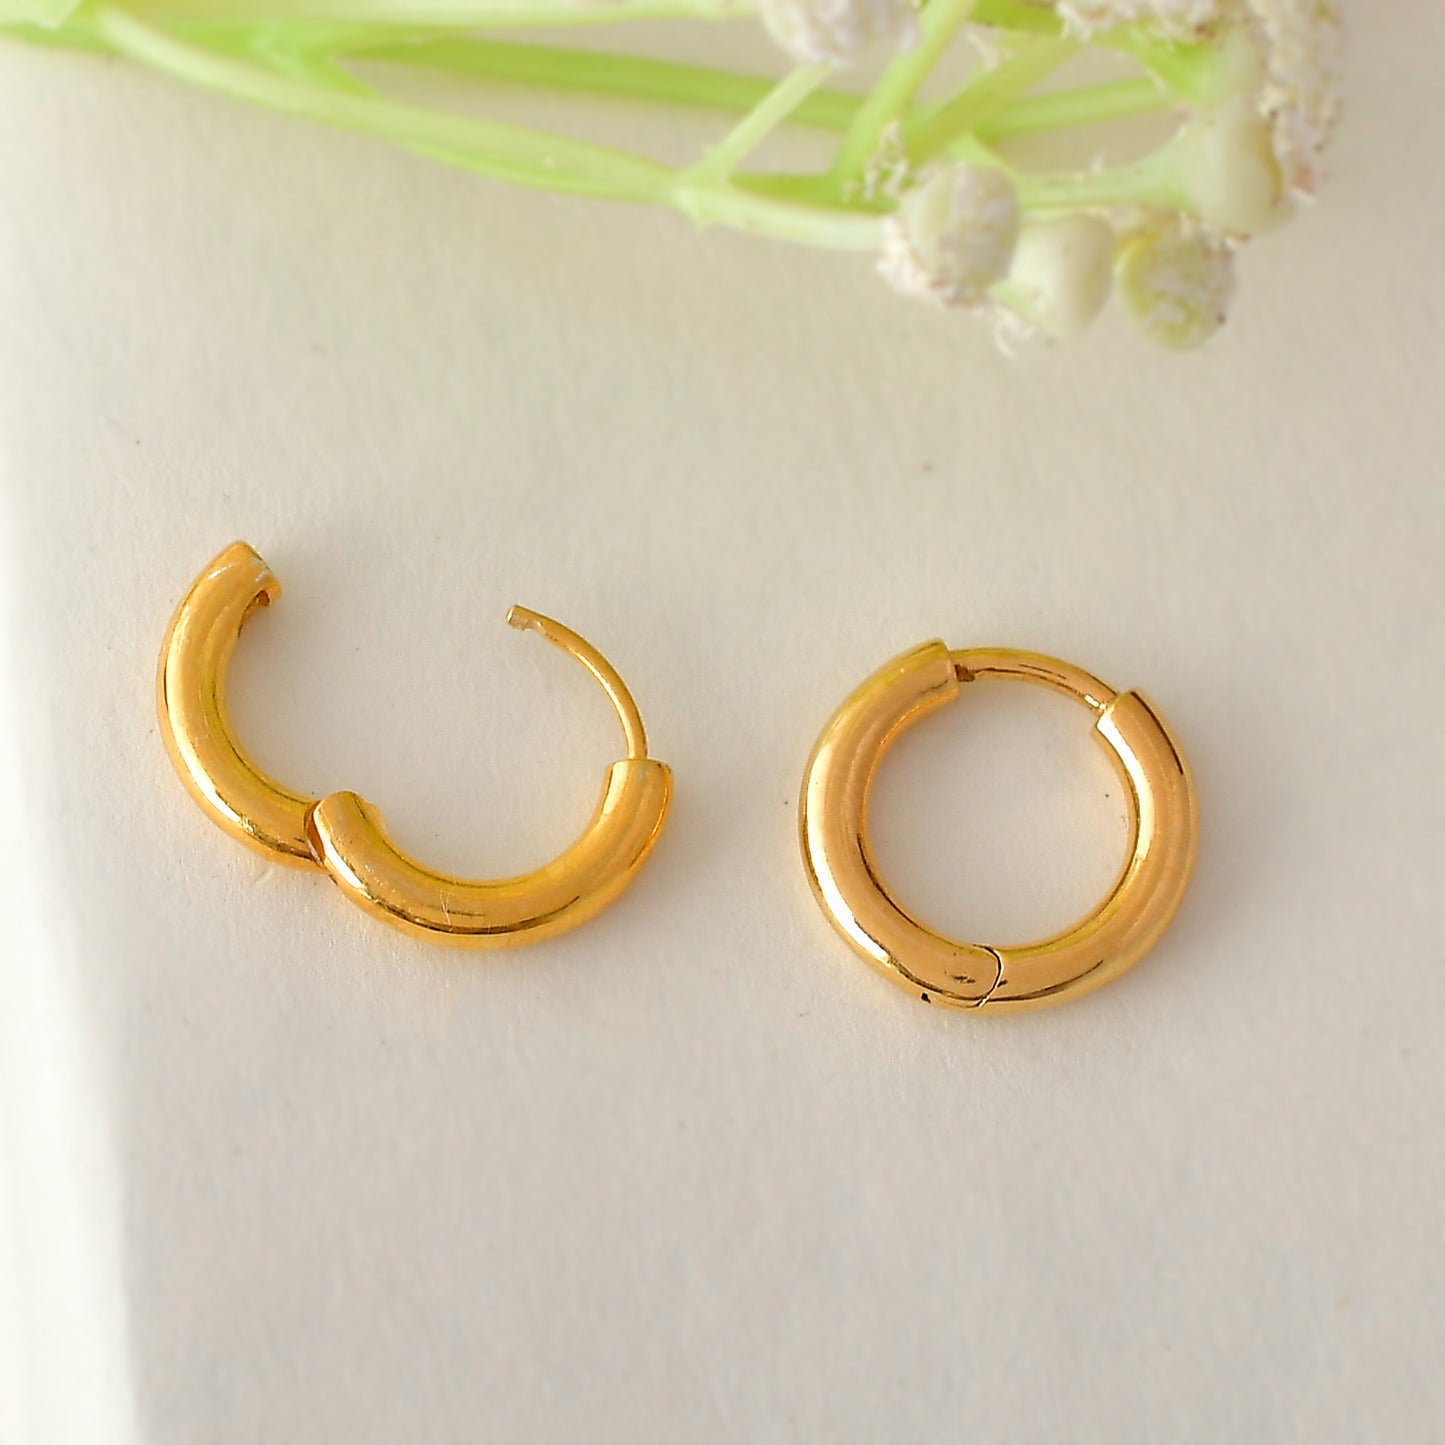 Silver Earrings Golden Glam Hoop Earrings Image 2